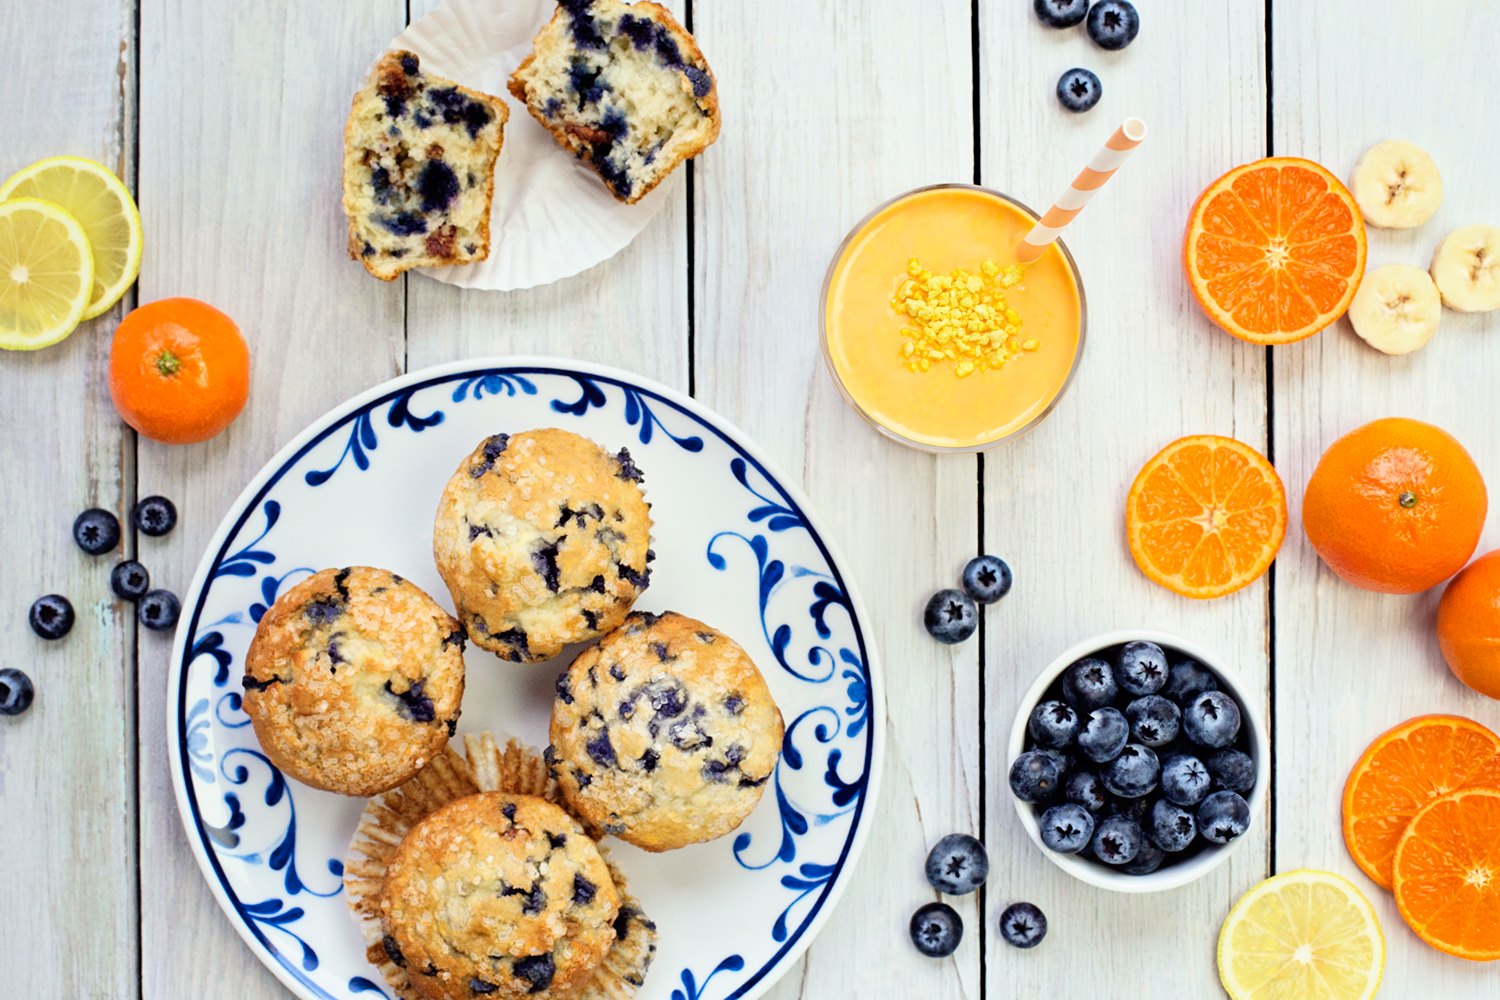 parker-products-brand-gestalt-blueberry-muffins